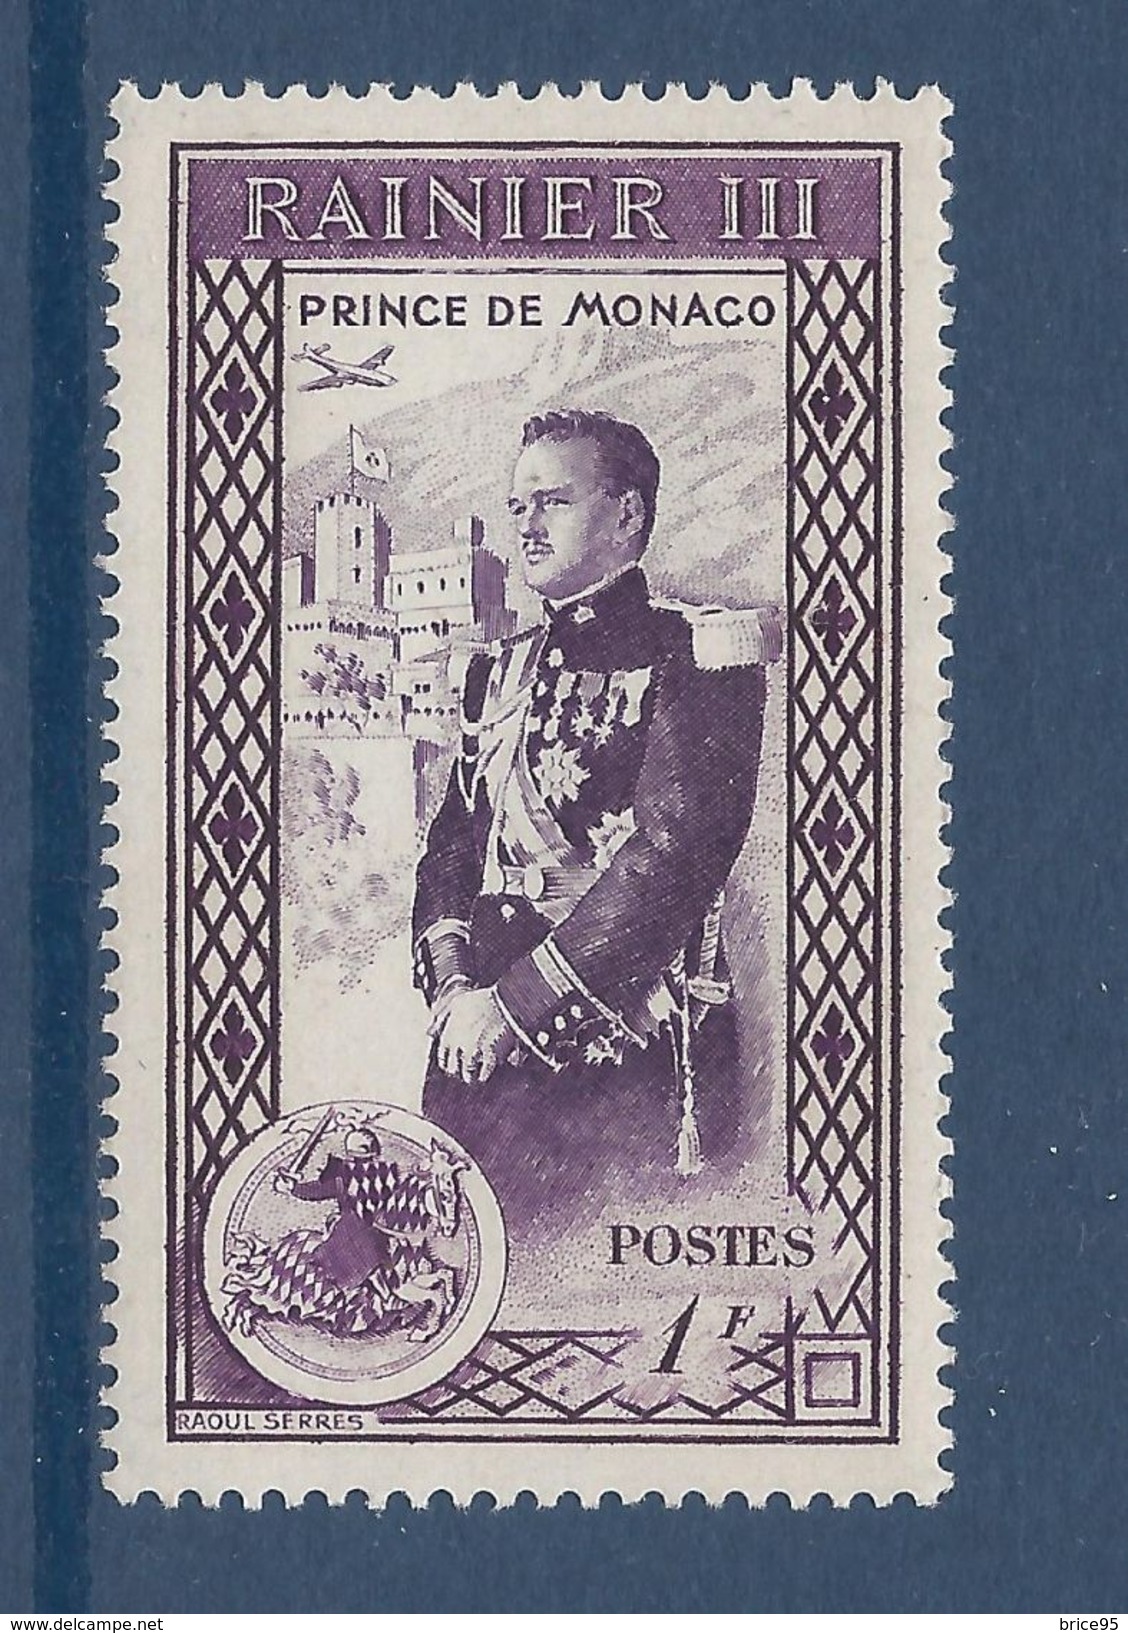 Monaco - YT N° 340 - Neuf Sans Charnière - 1950 - Neufs